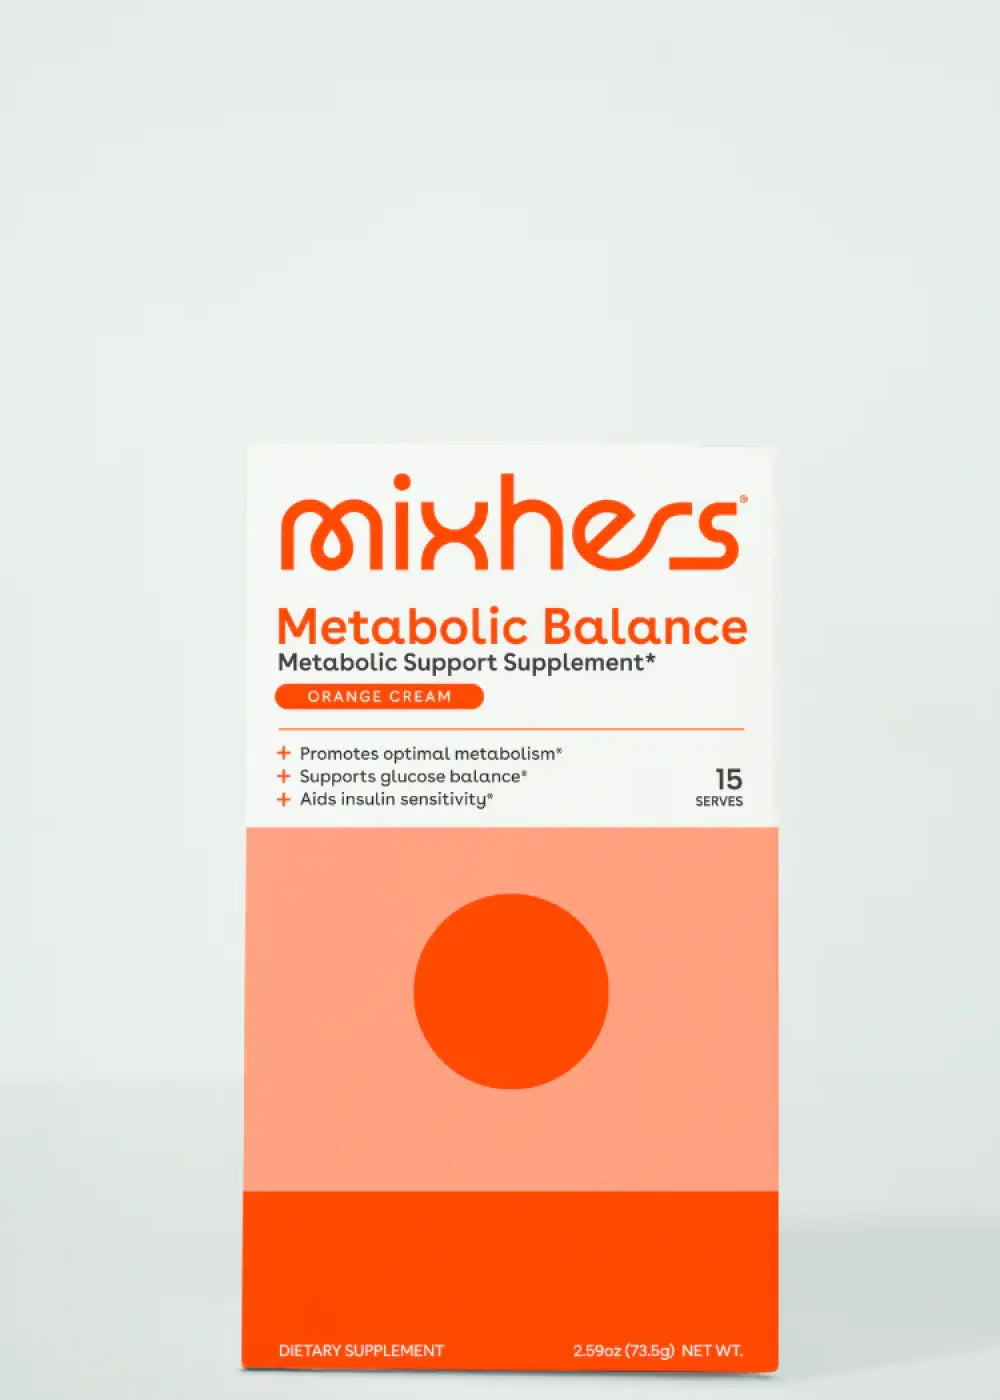 Metabolic Balance image 1